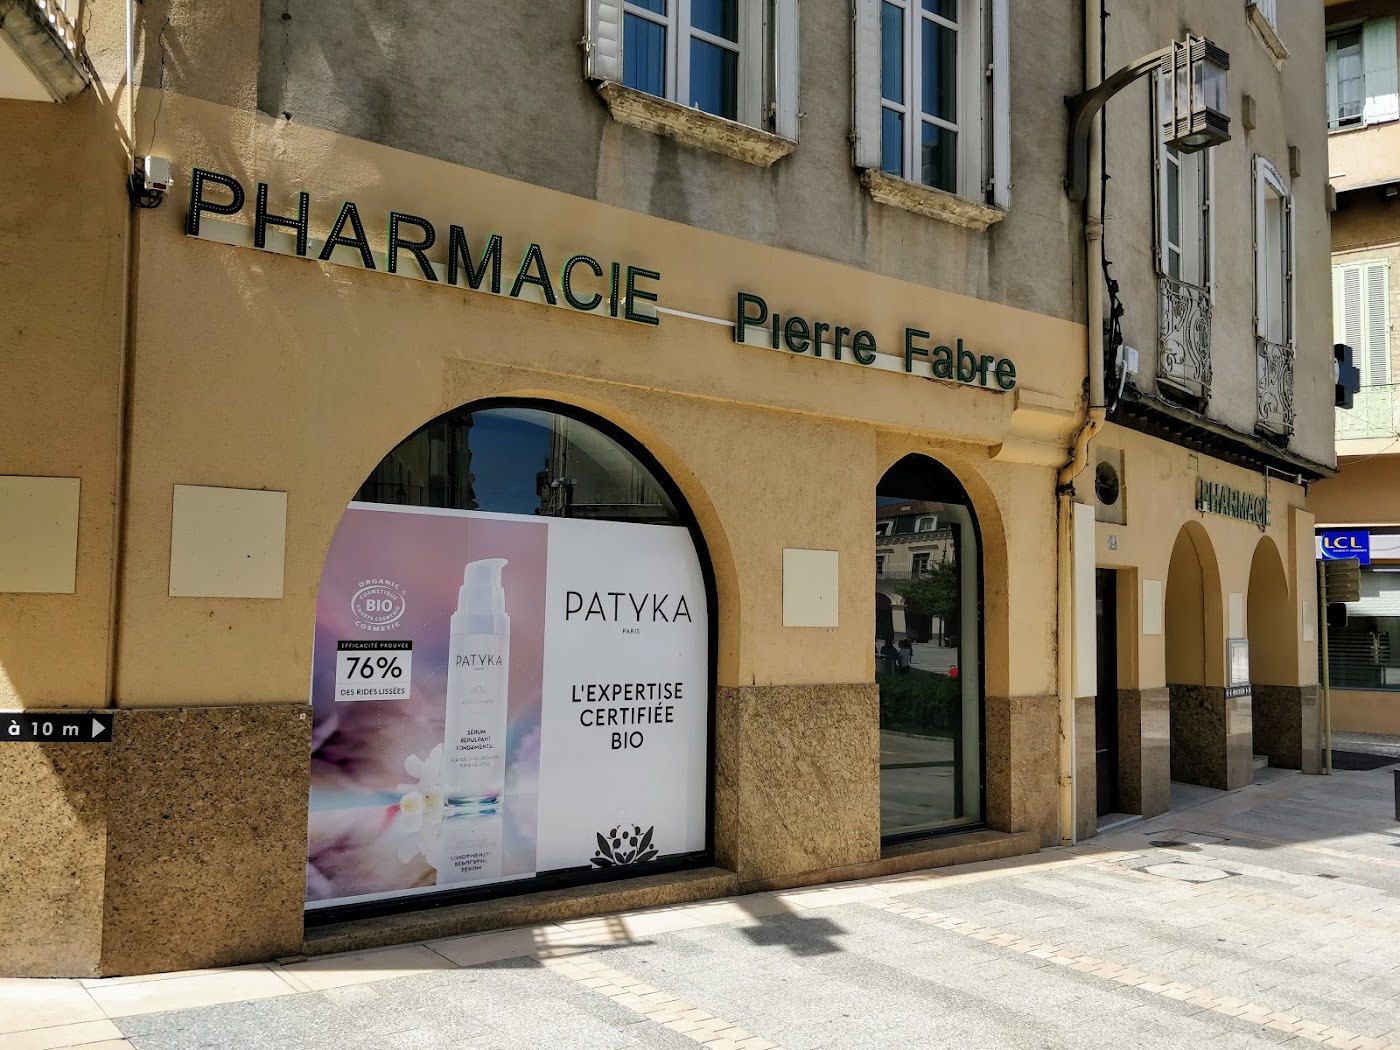 Pharmacie Pierre Fabre